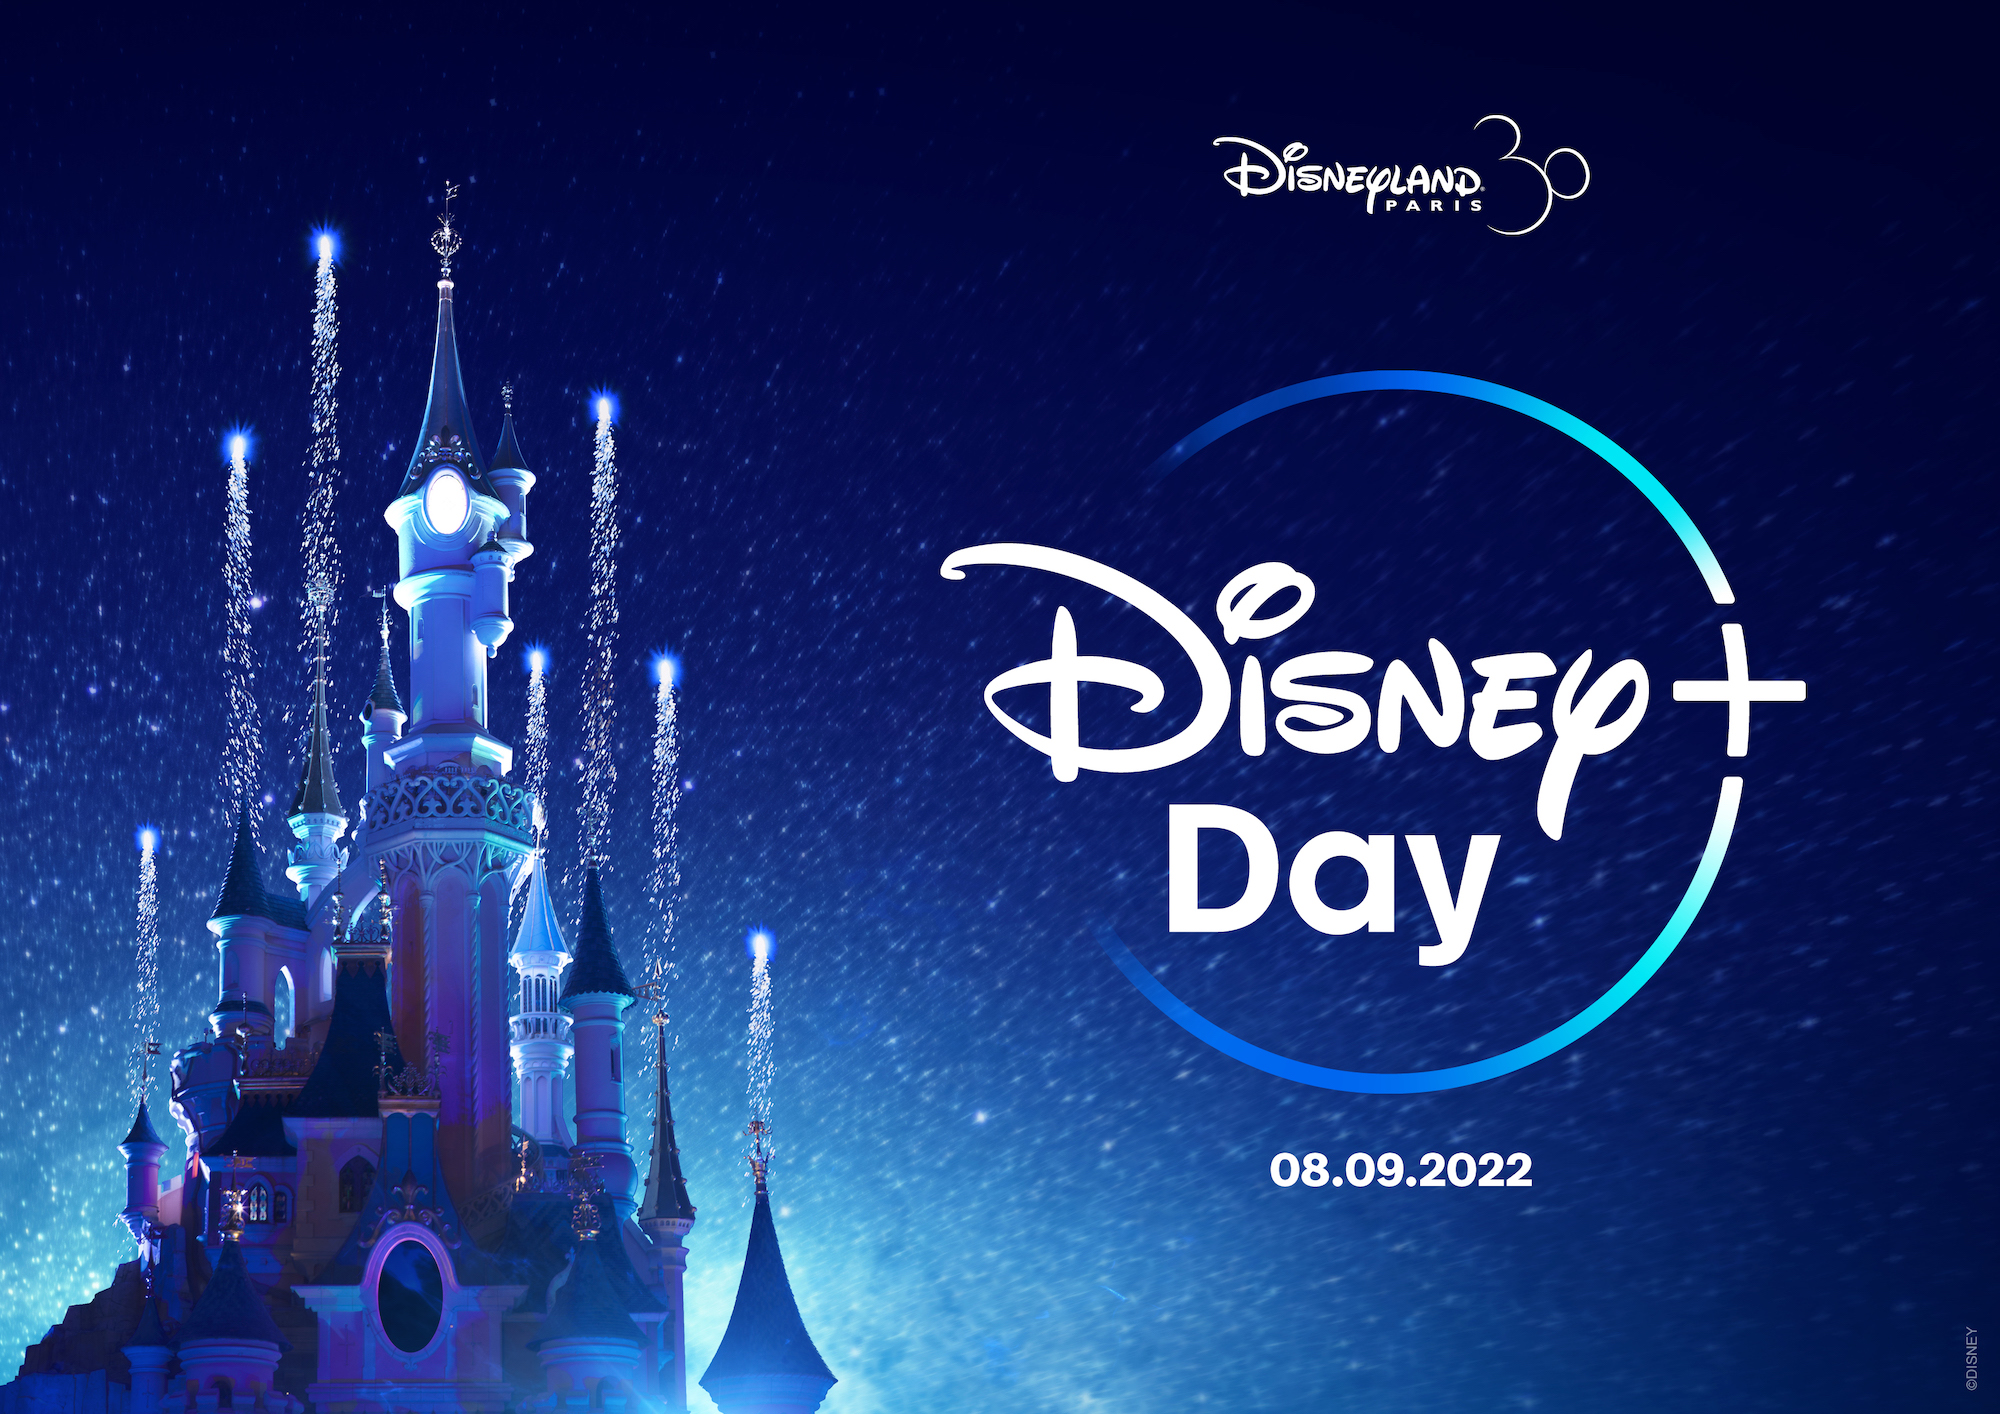 Celebrate Disney+ Day on September 8th at Disneyland Paris!